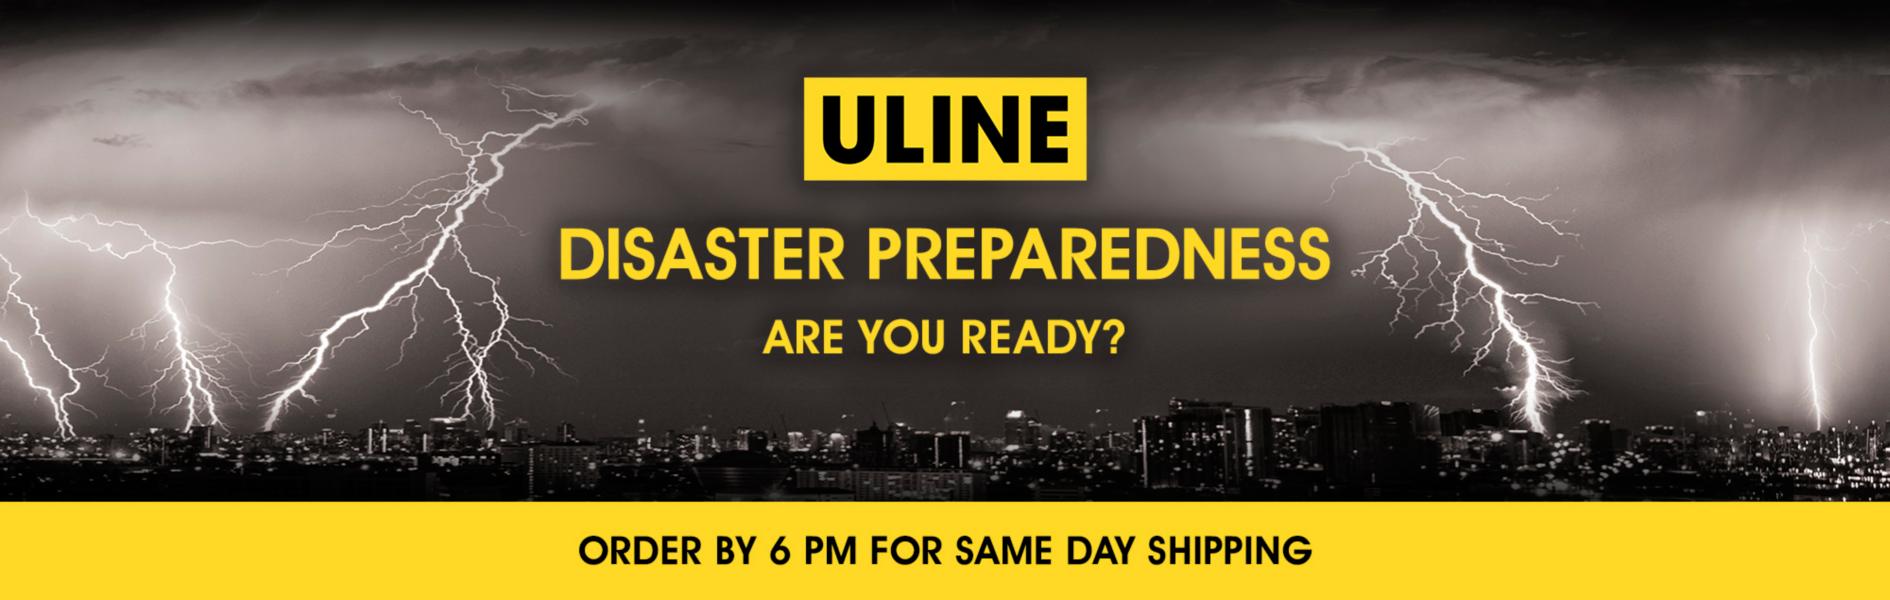 Uline: Disaster Preparedness